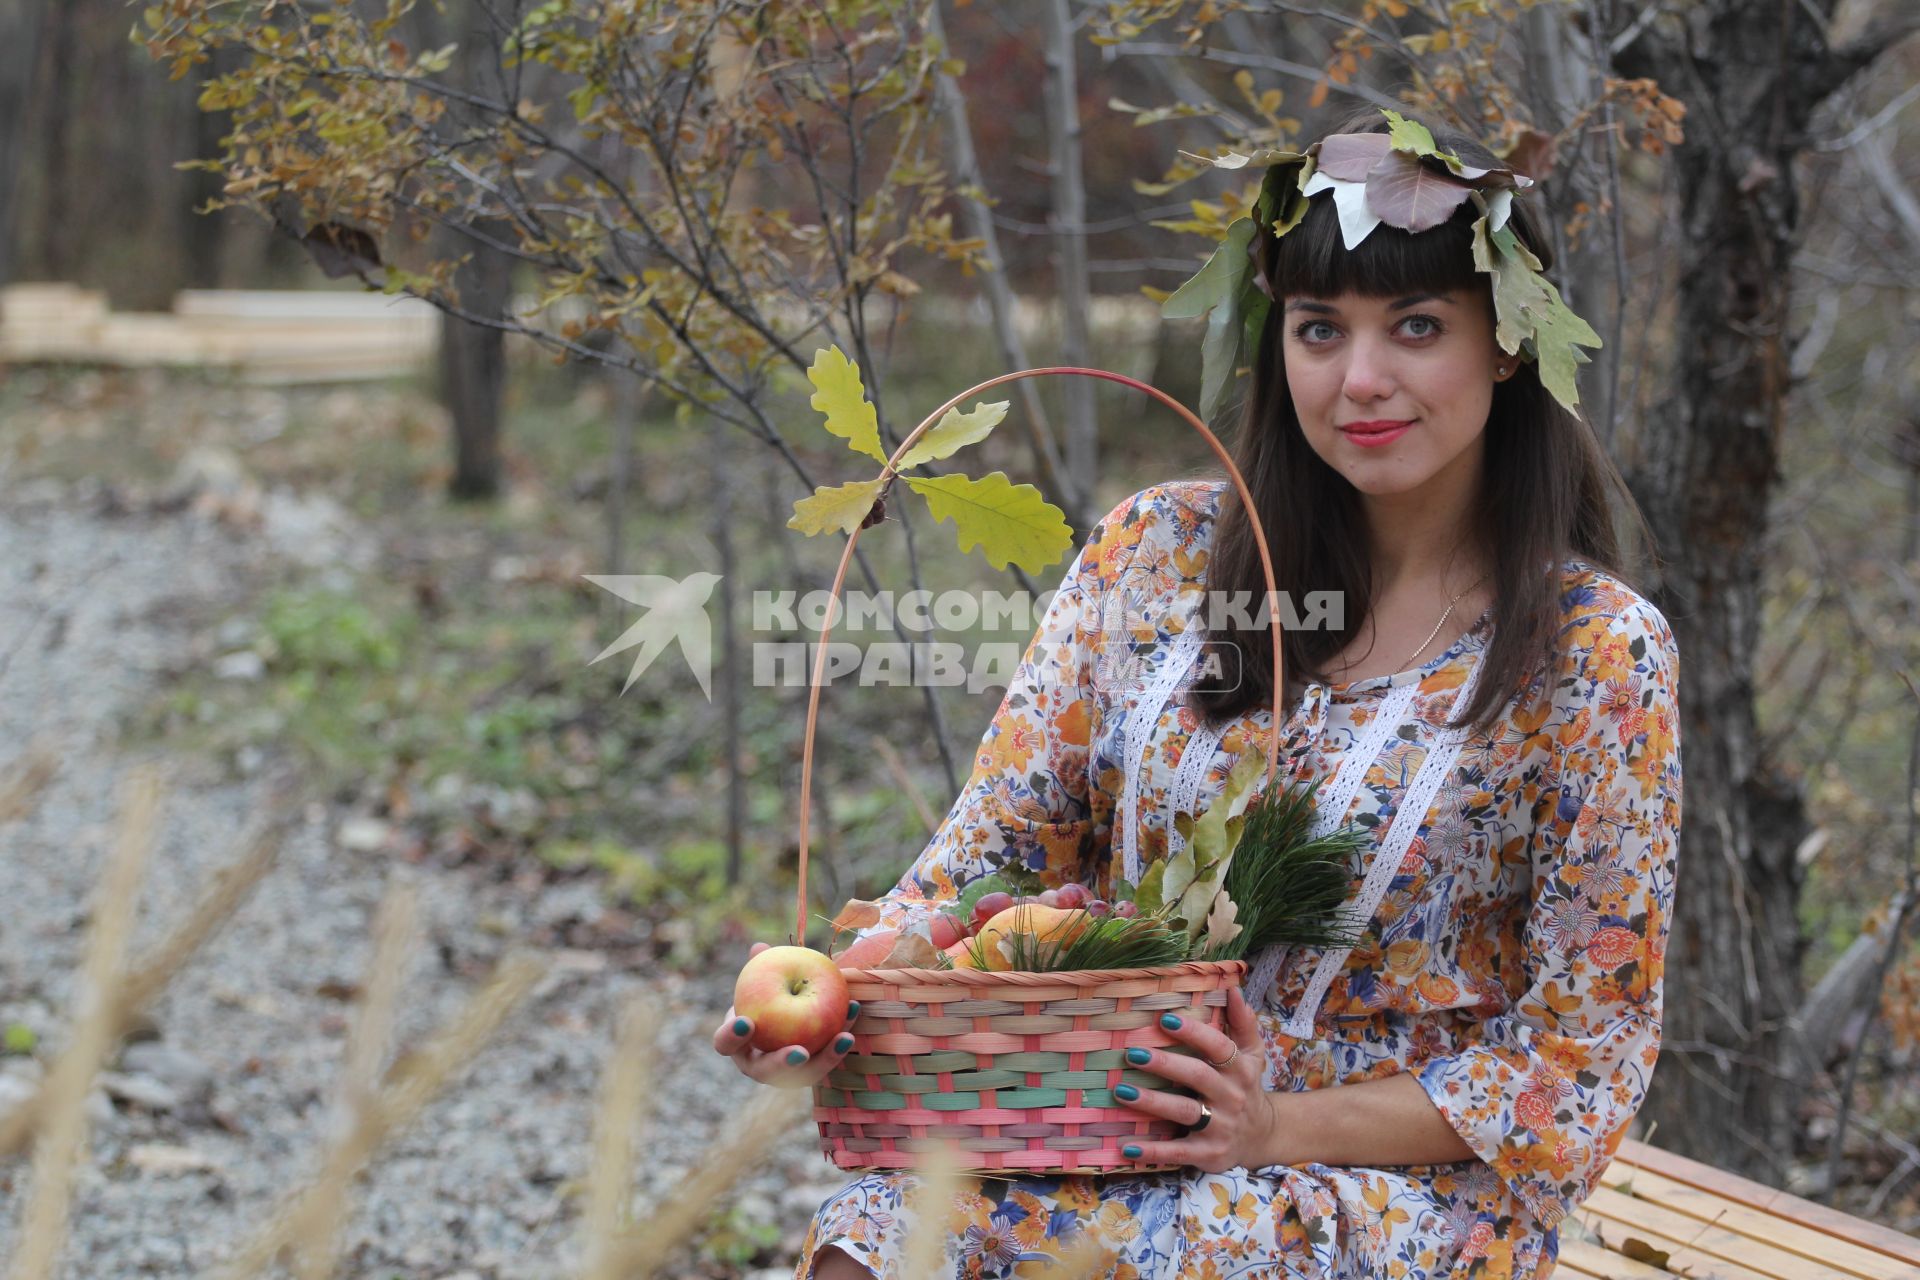 Иркутск. Девушка с  корзиной на фоне осеннего леса.